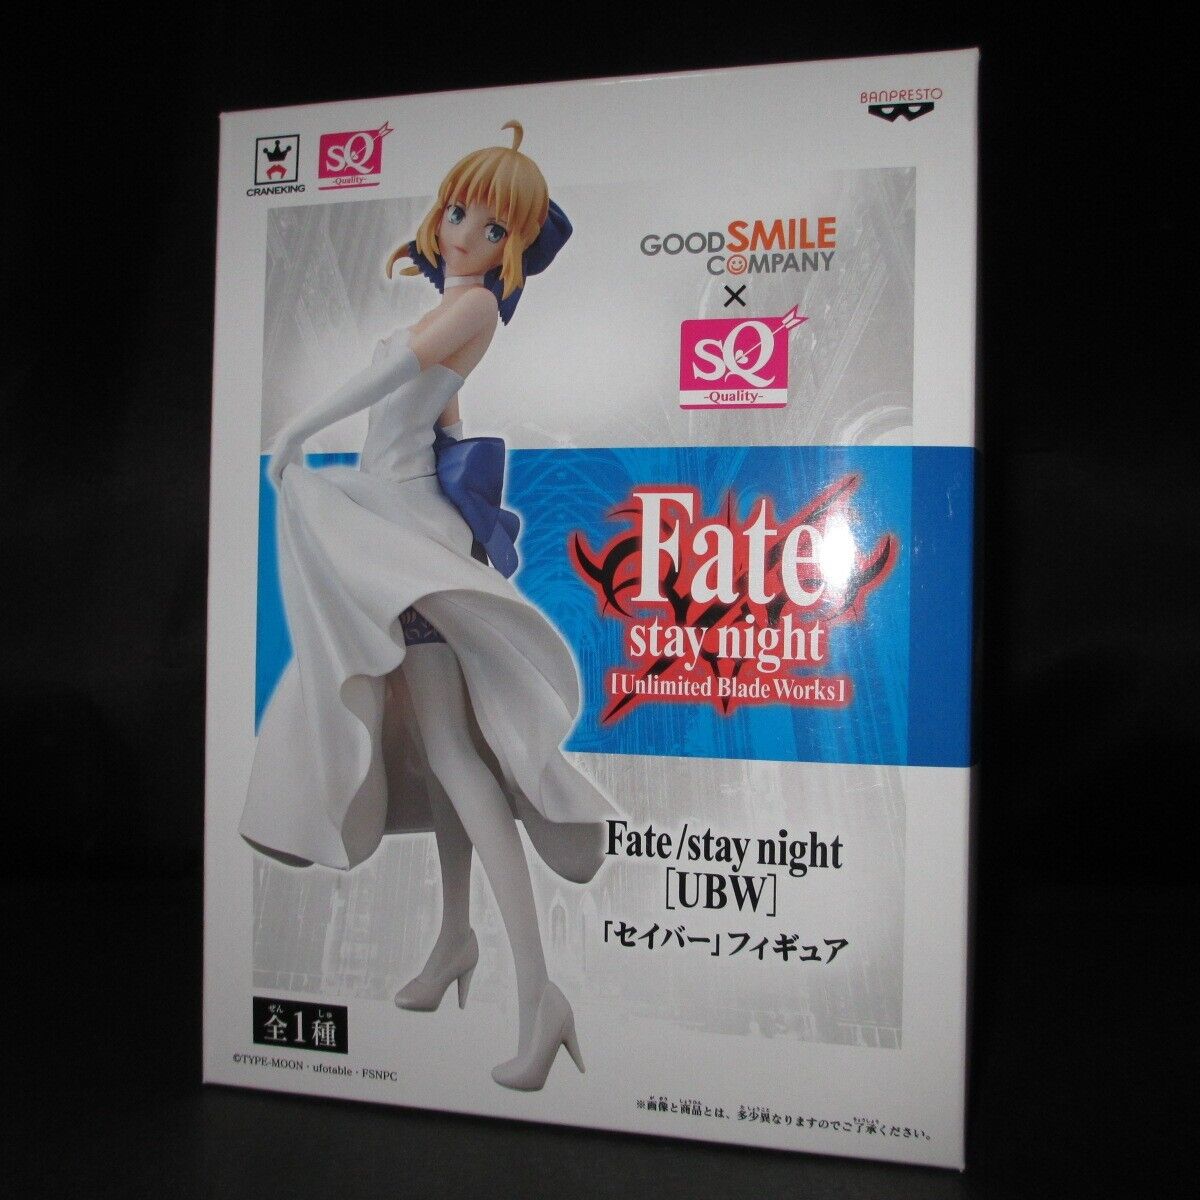 Saber SQ Figure anime Fate Stay Night Unlimited Blade Works Banpresto